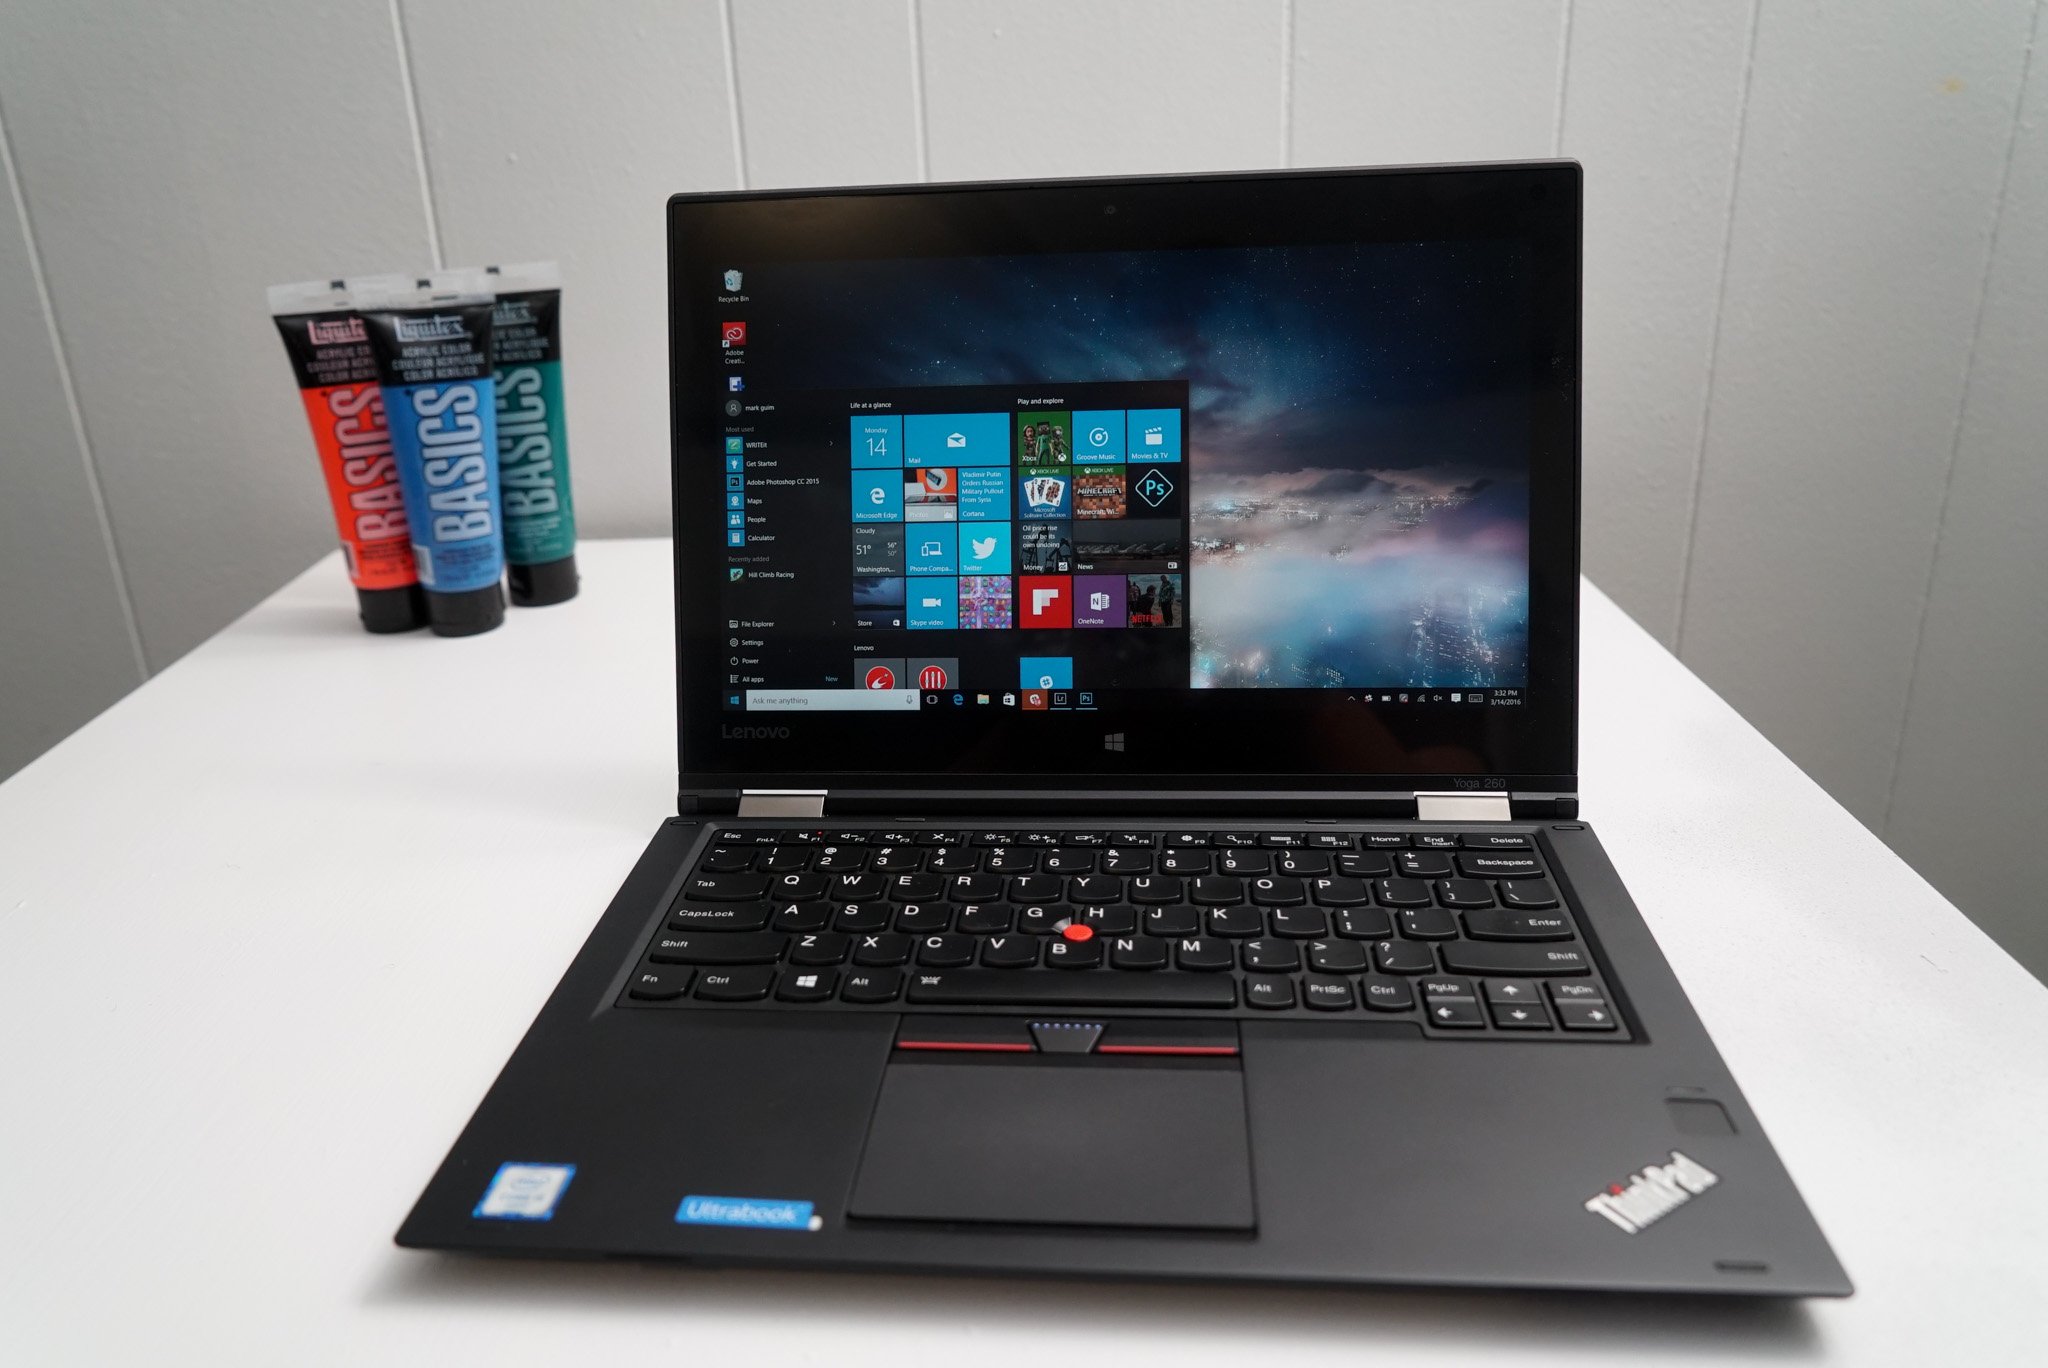 Lenovo ThinkPad Yoga 260 review: a flexible business laptop 